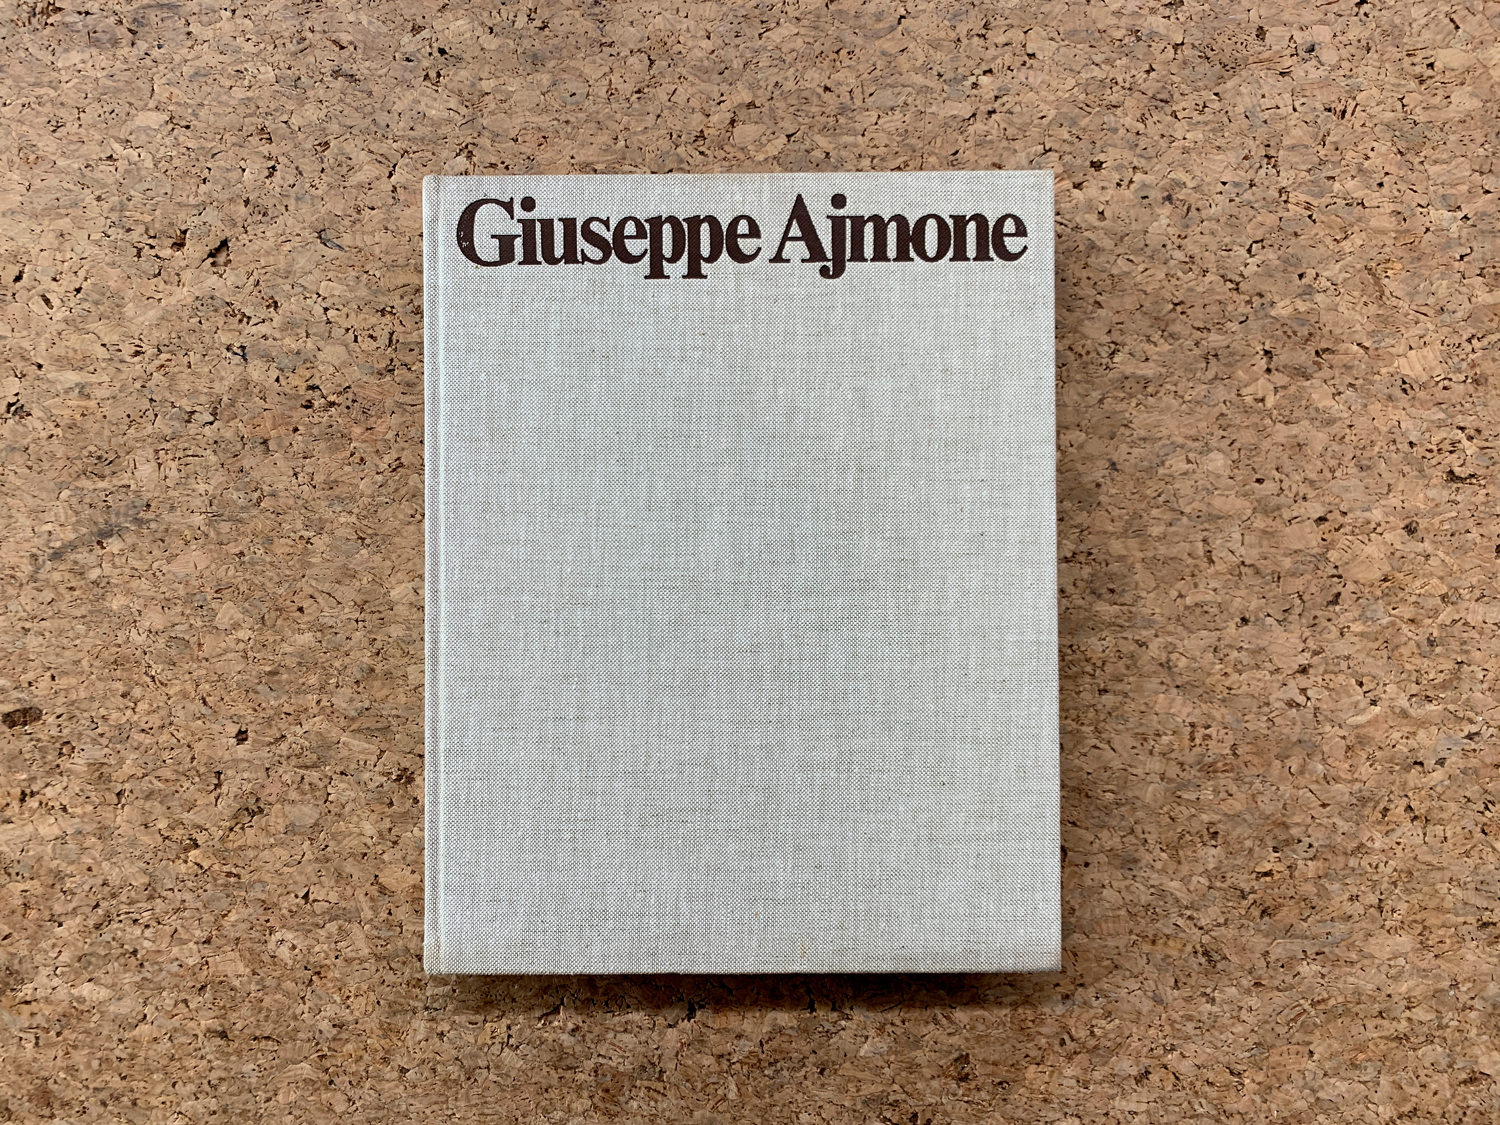 EDIZIONI D'ARTE (GIUSEPPE AJMONE) - Giuseppe Ajmone. La luce delle cose, 1976